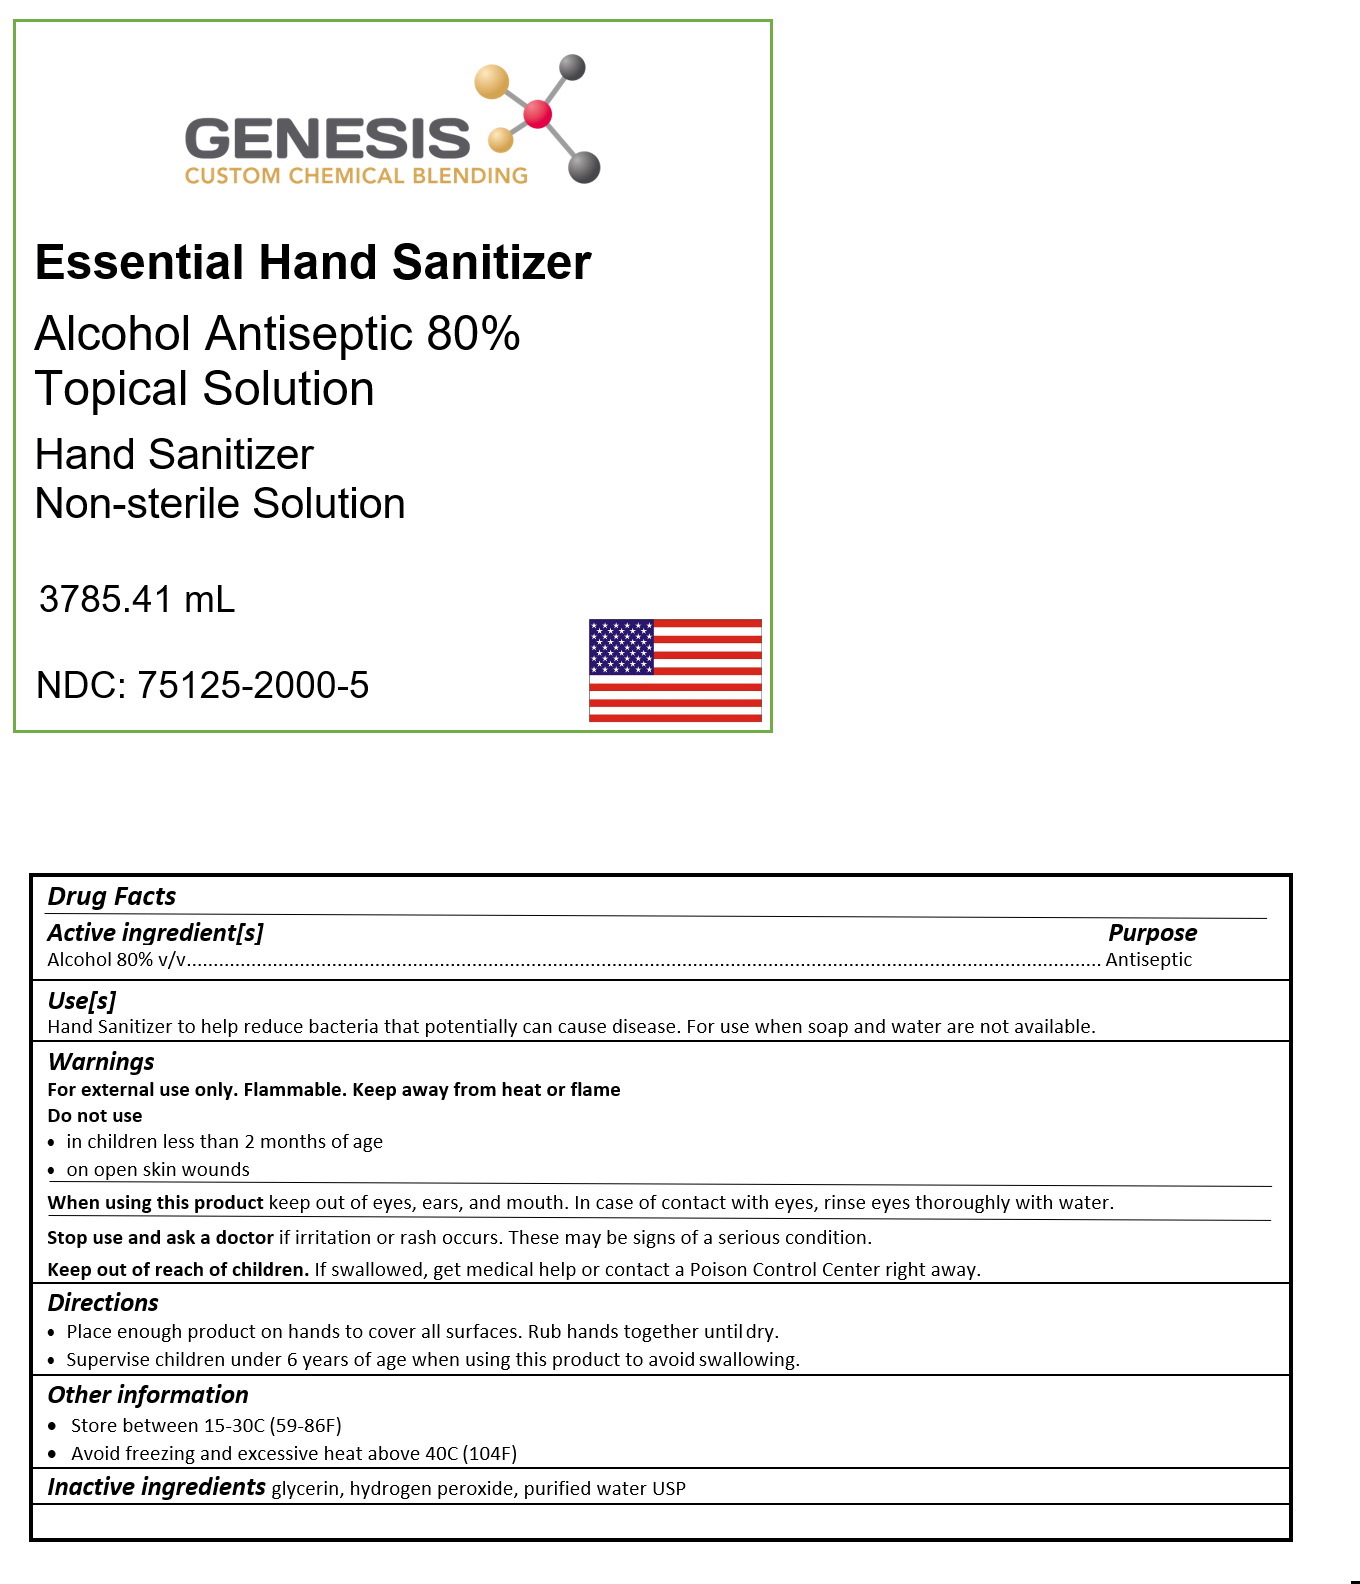 Ethanol80-handsan-consumer-75125-2000-5